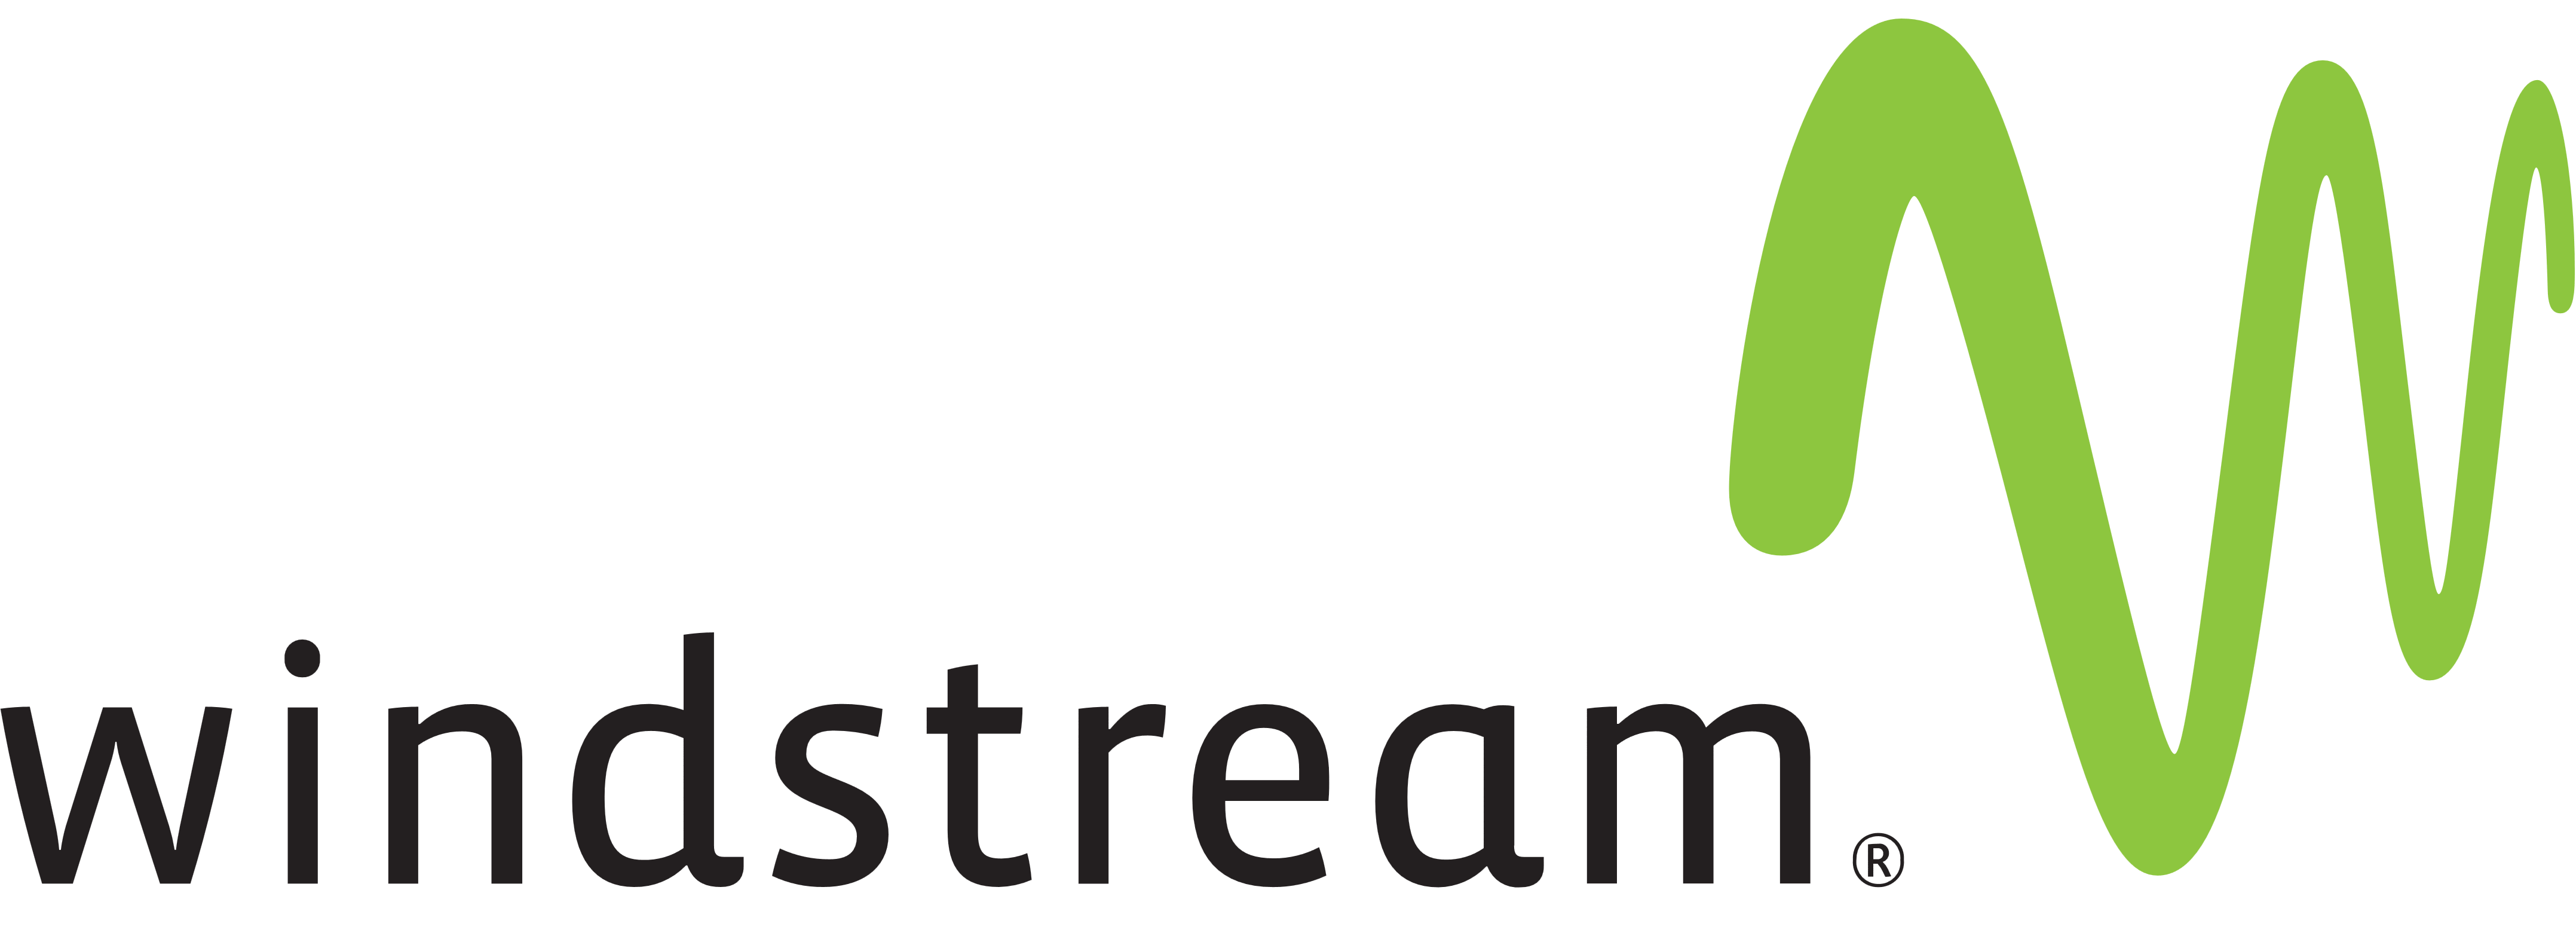 Windstream logo, logotype